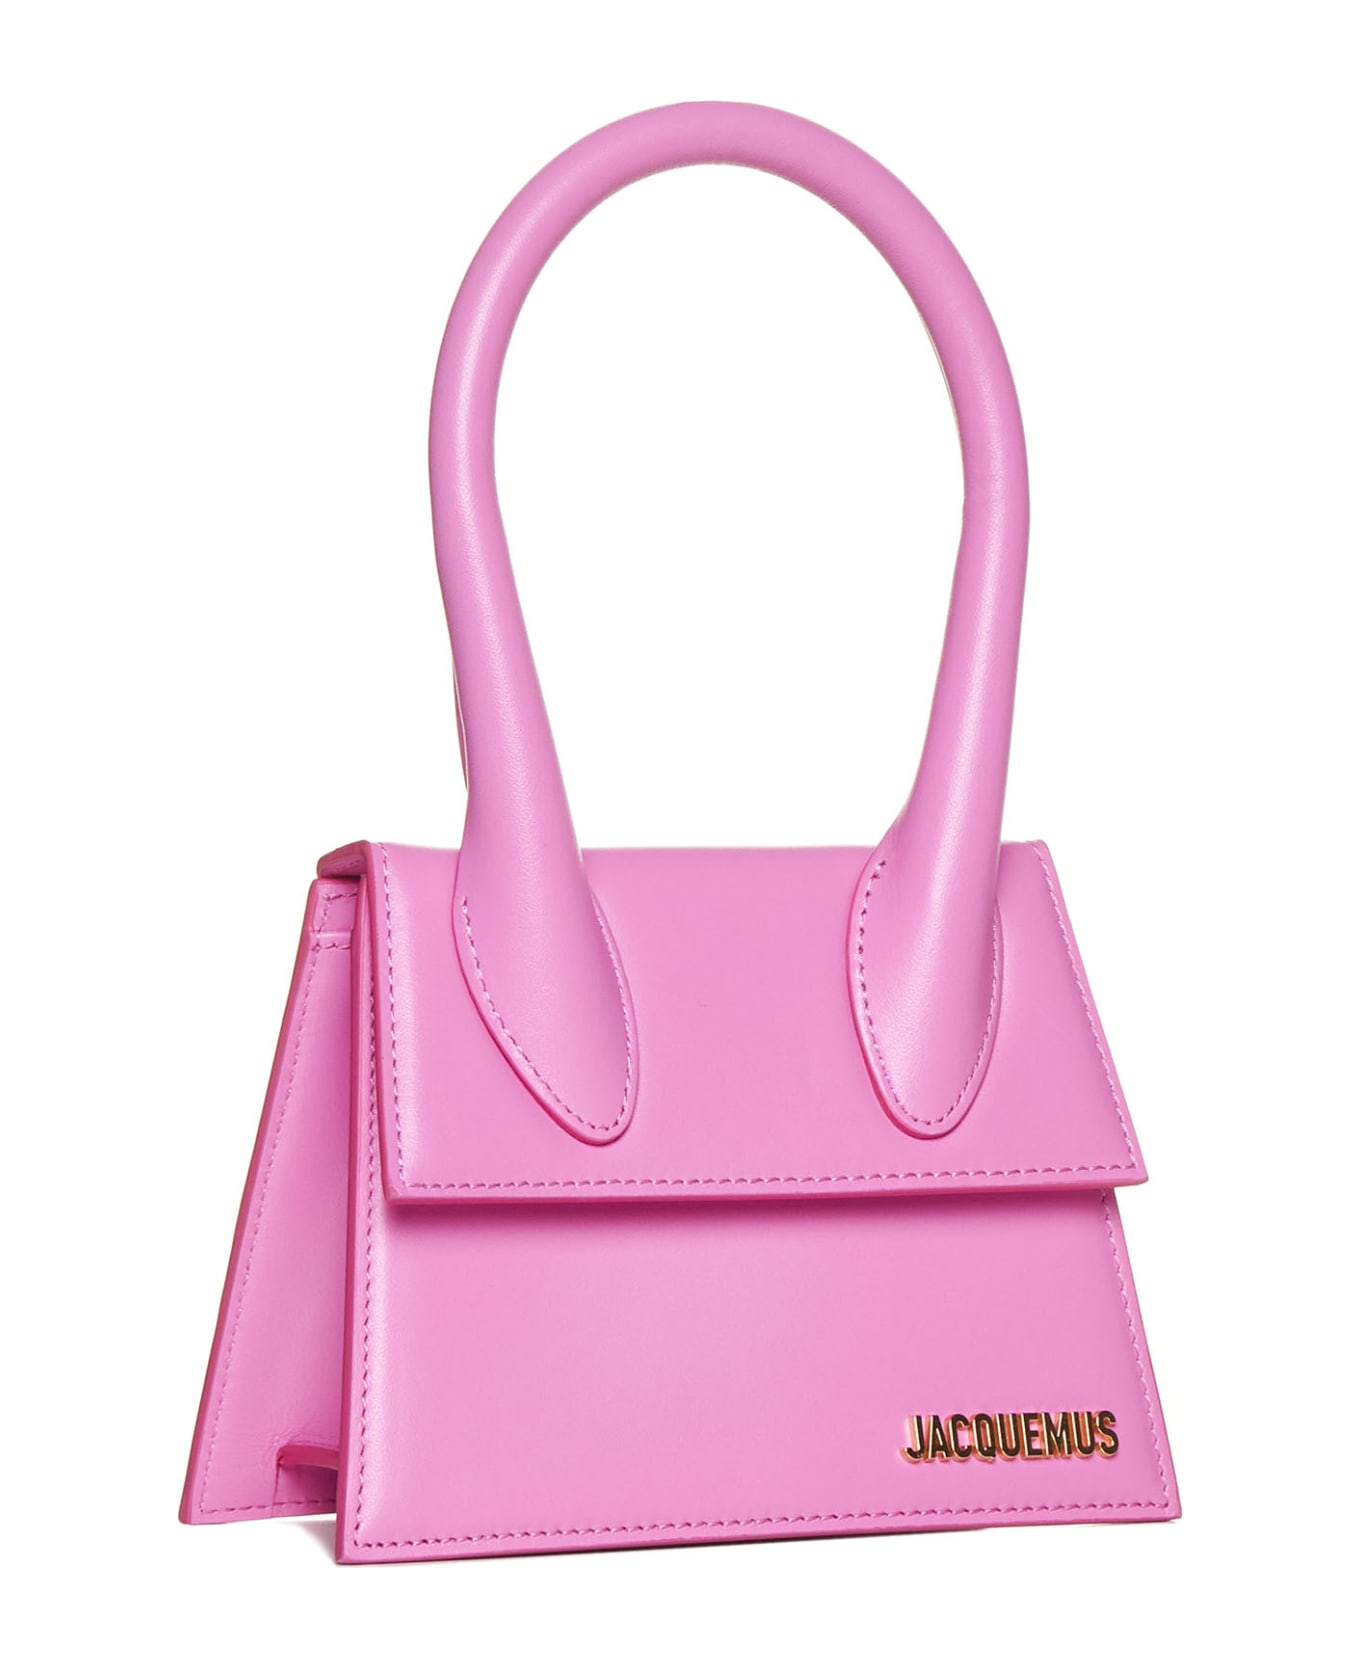 Jacquemus Borsa - Neon pink